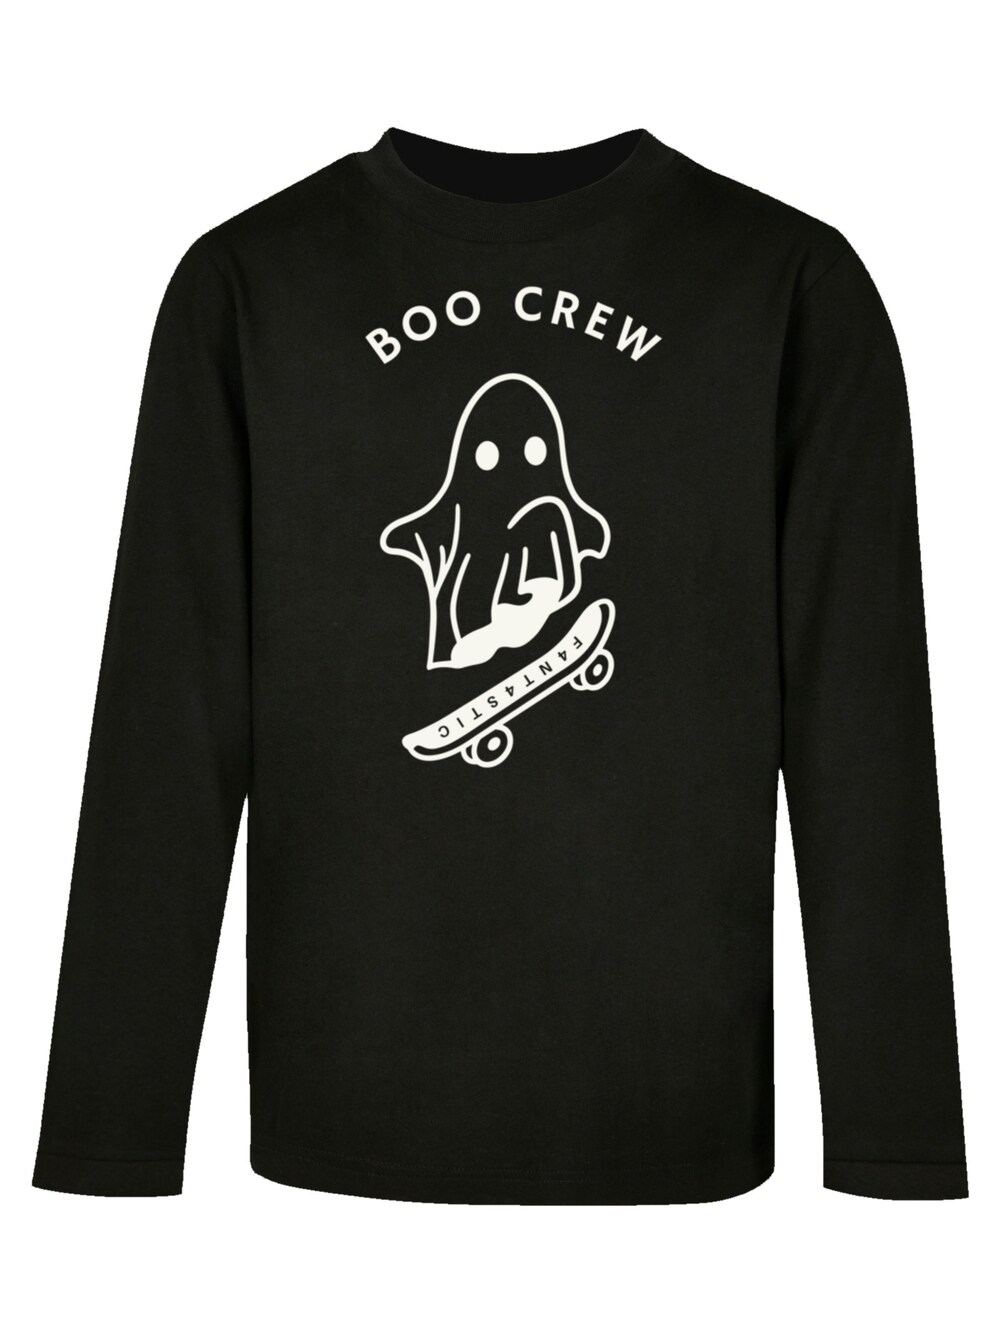 Рубашка F4Nt4Stic Boo Crew Halloween, черный